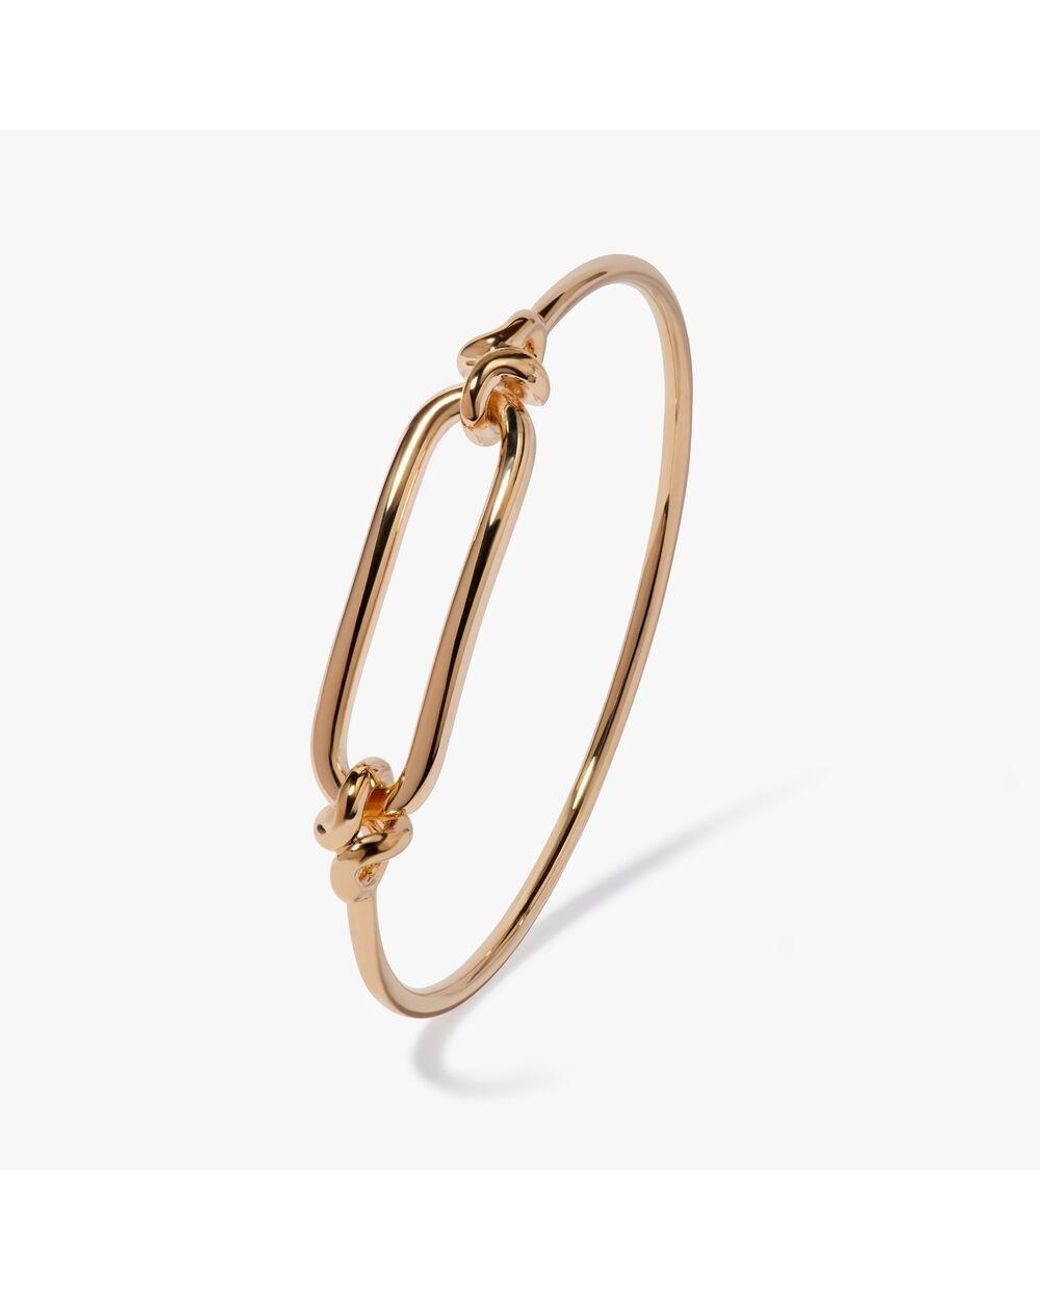 Name Bracelet Rose Gold | Personalised Fine Jewellery Gifts | NOA mini – NOA  fine jewellery